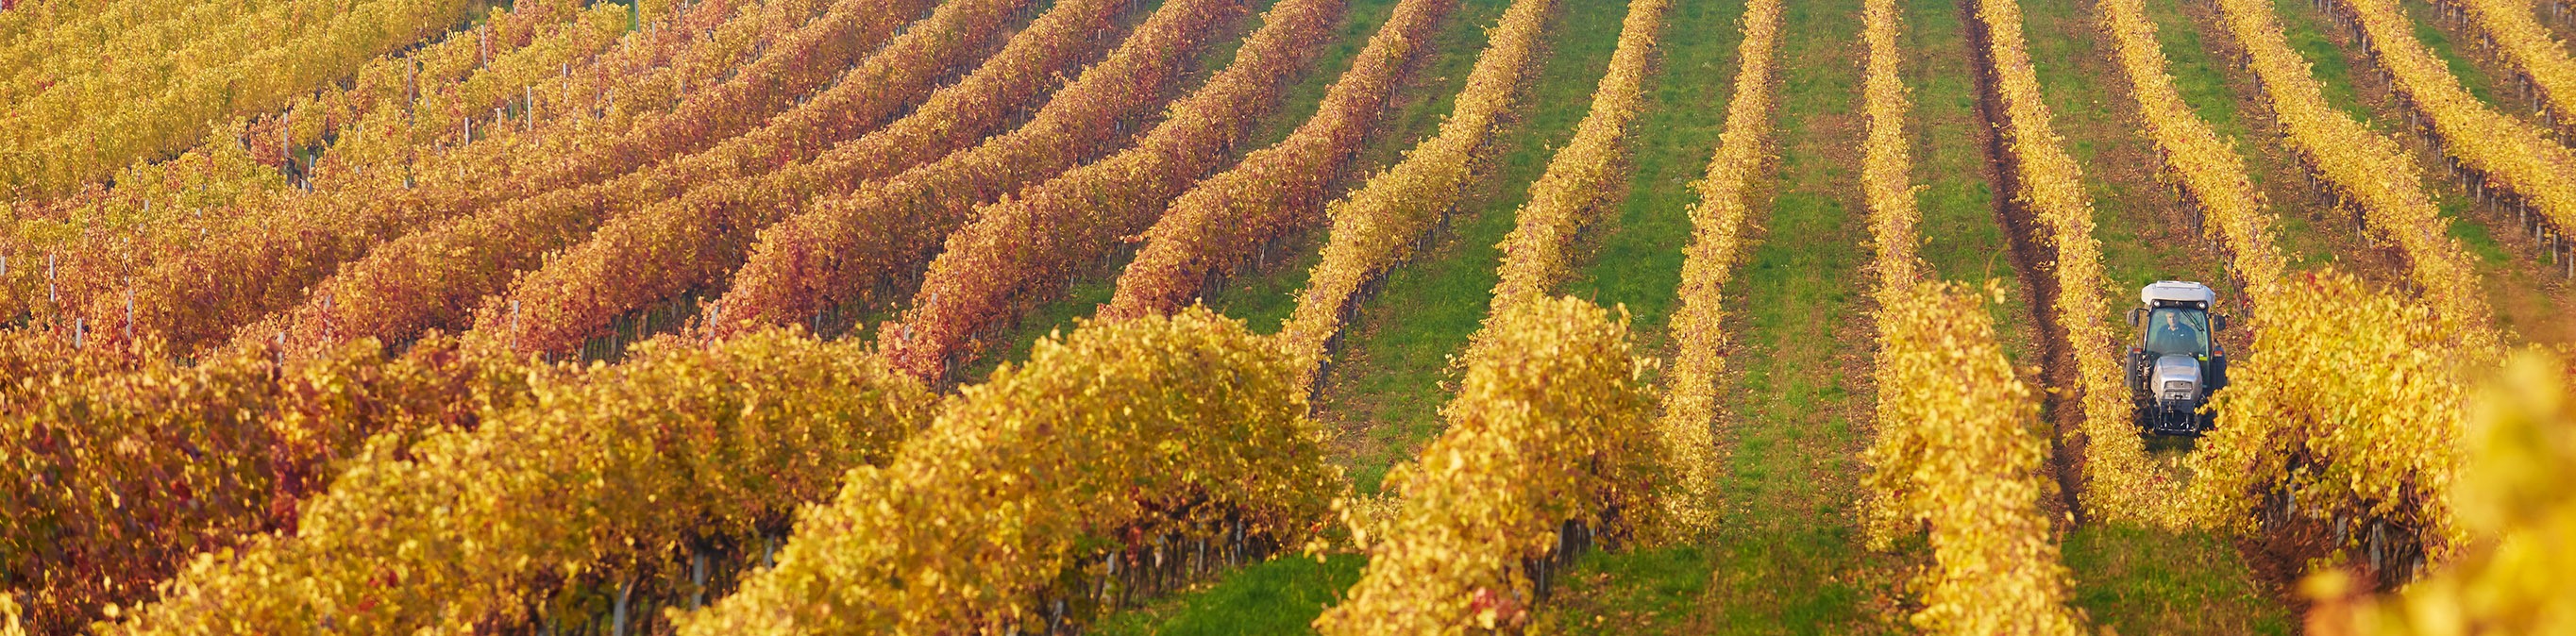 Weingarten Herbst Rust Neusiedlersee